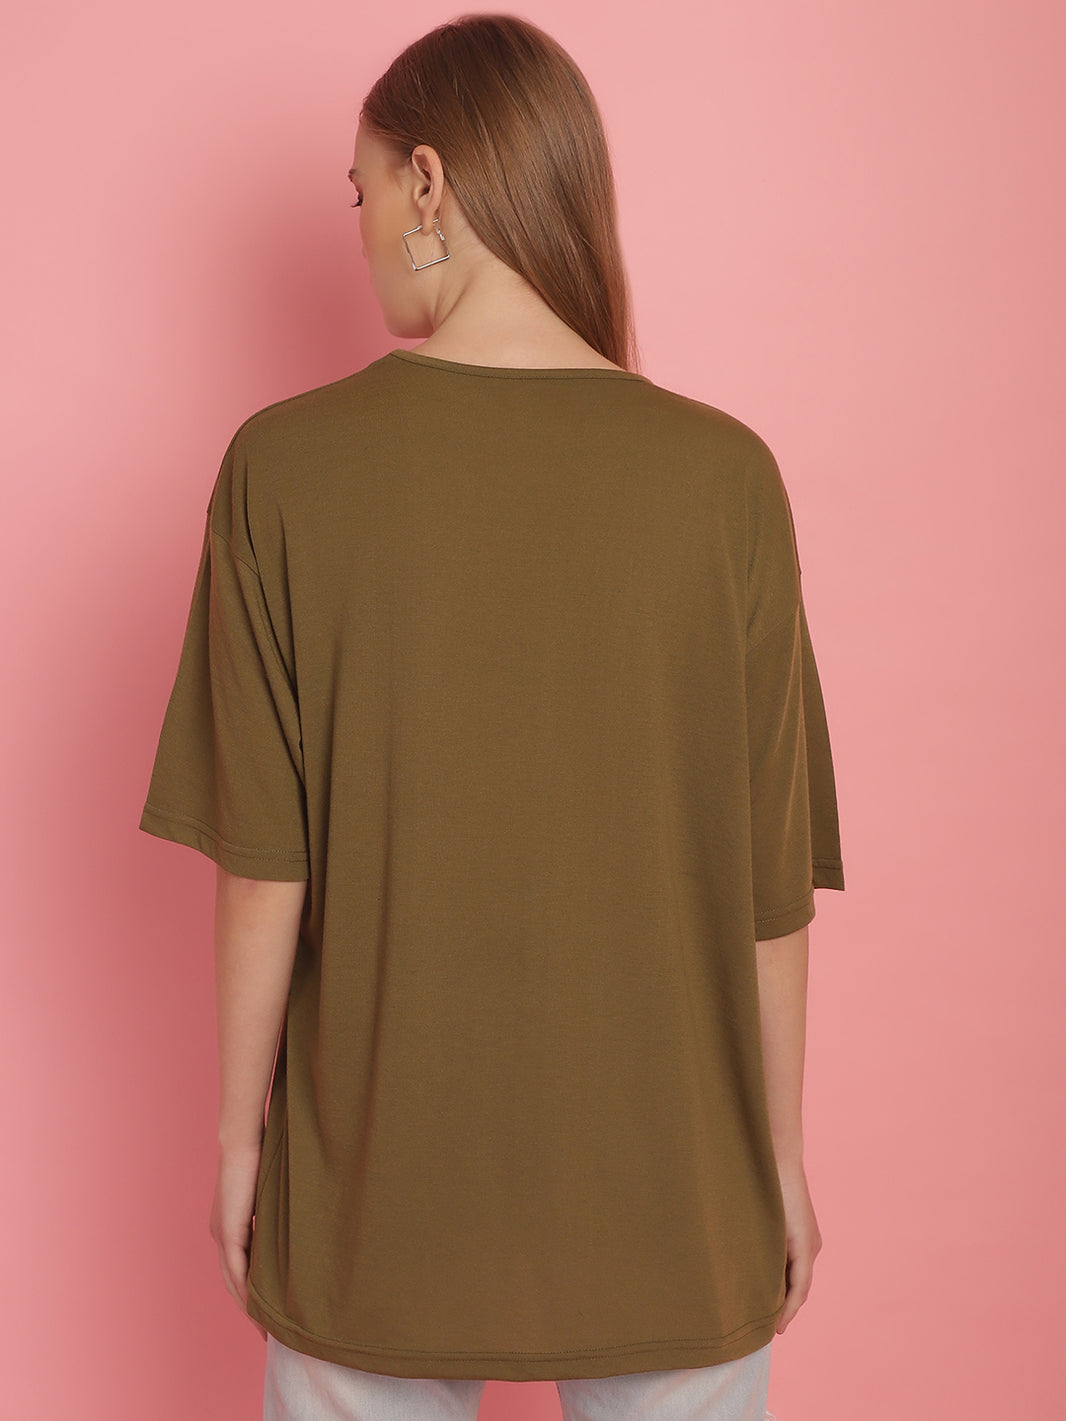 Vimal Jonney Printed Green Round Neck Cotton Oversize Half sleeves Tshirt For Women